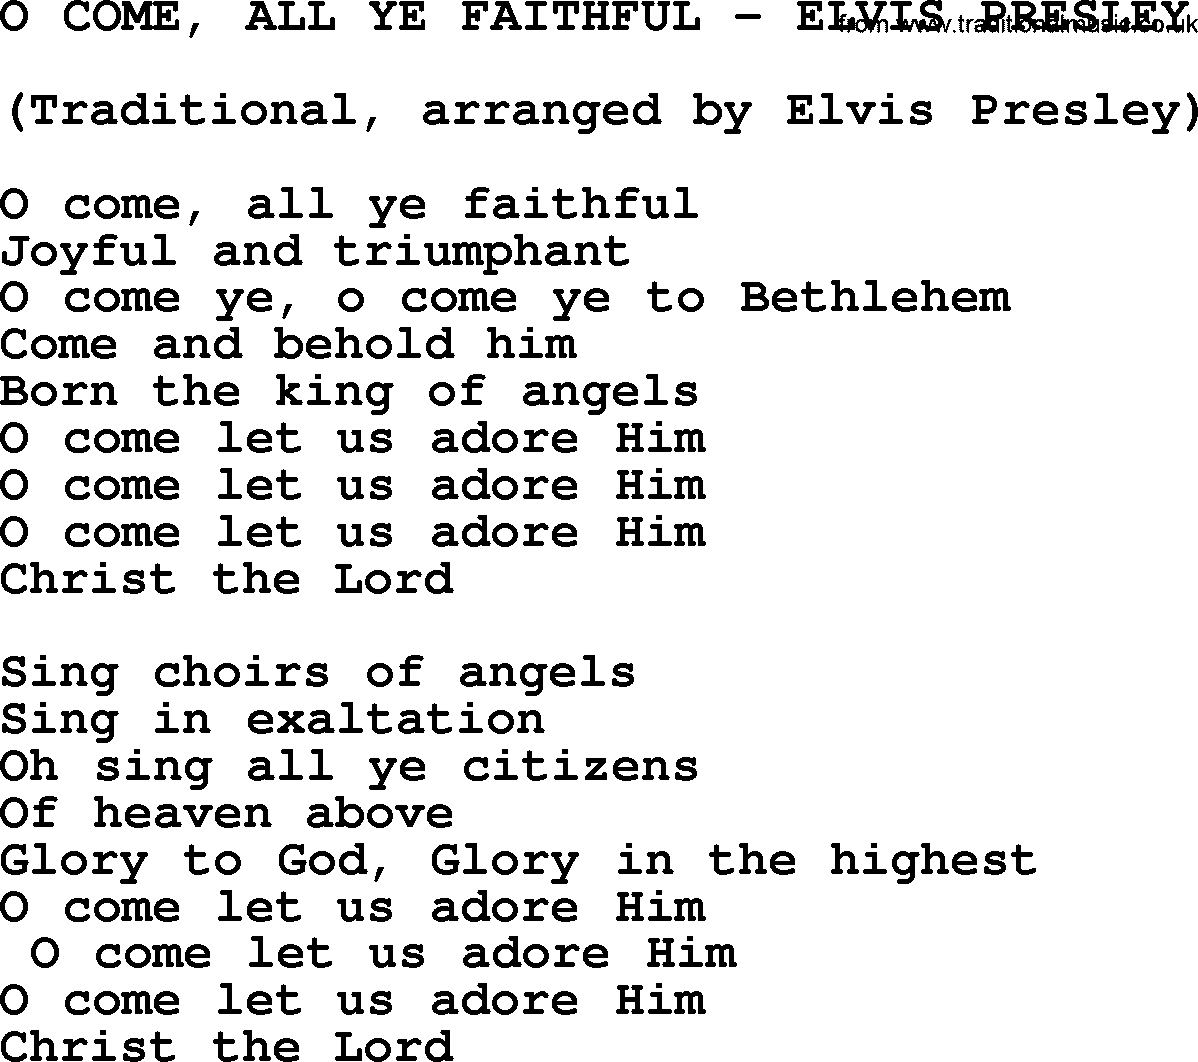 Elvis Presley song: O Come, All Ye Faithful-Elvis Presley-.txt lyrics and chords